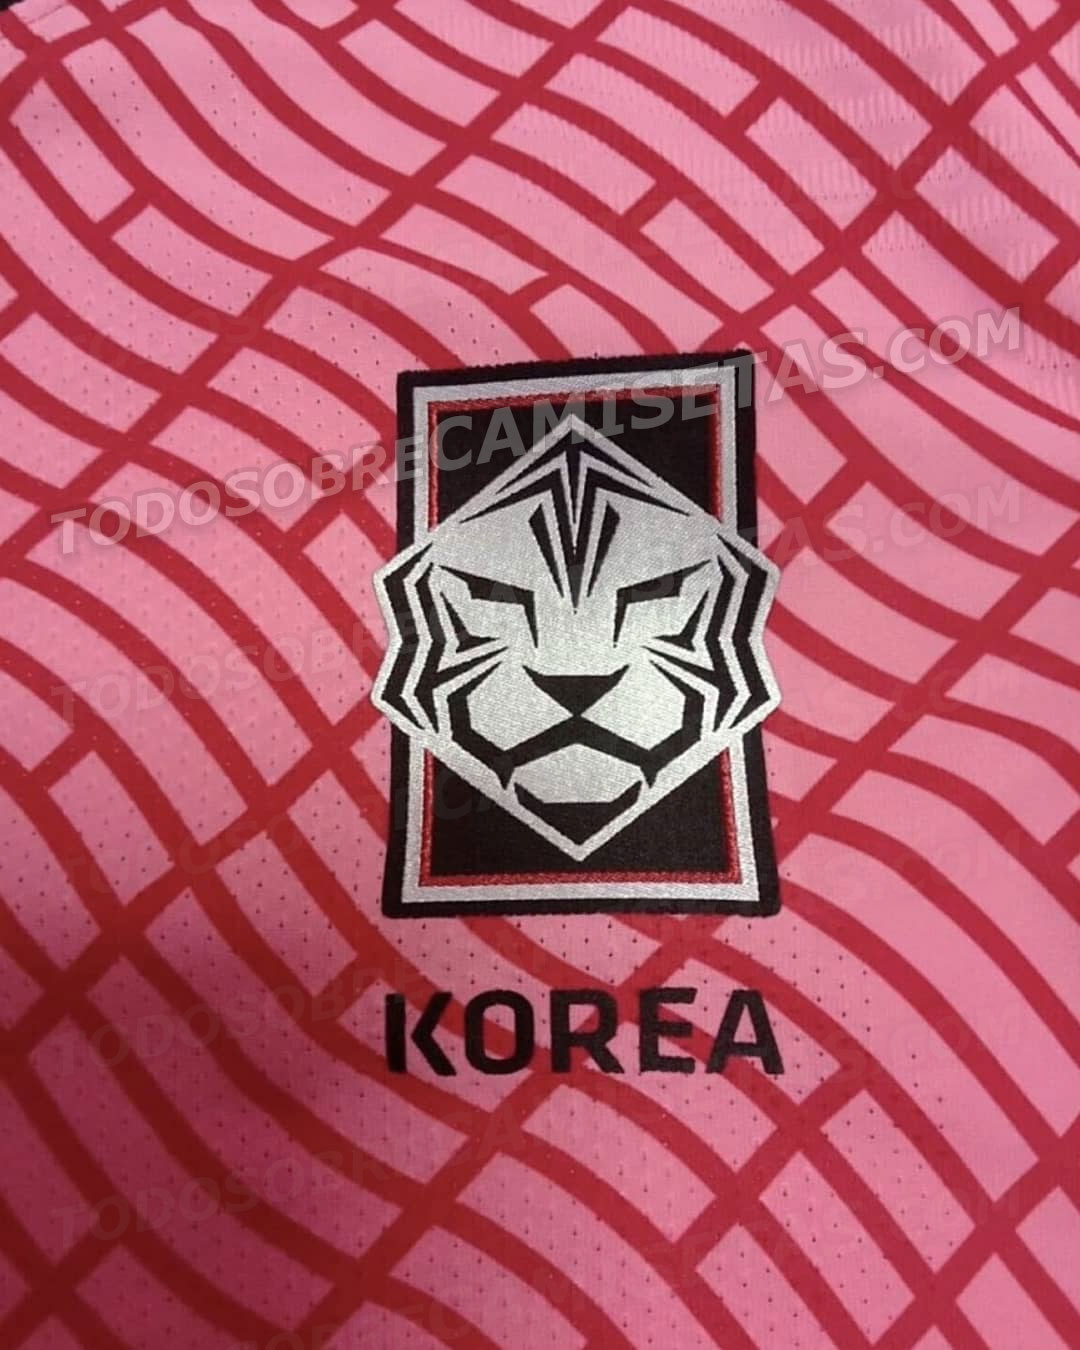 South Korea 2020 Home Kit